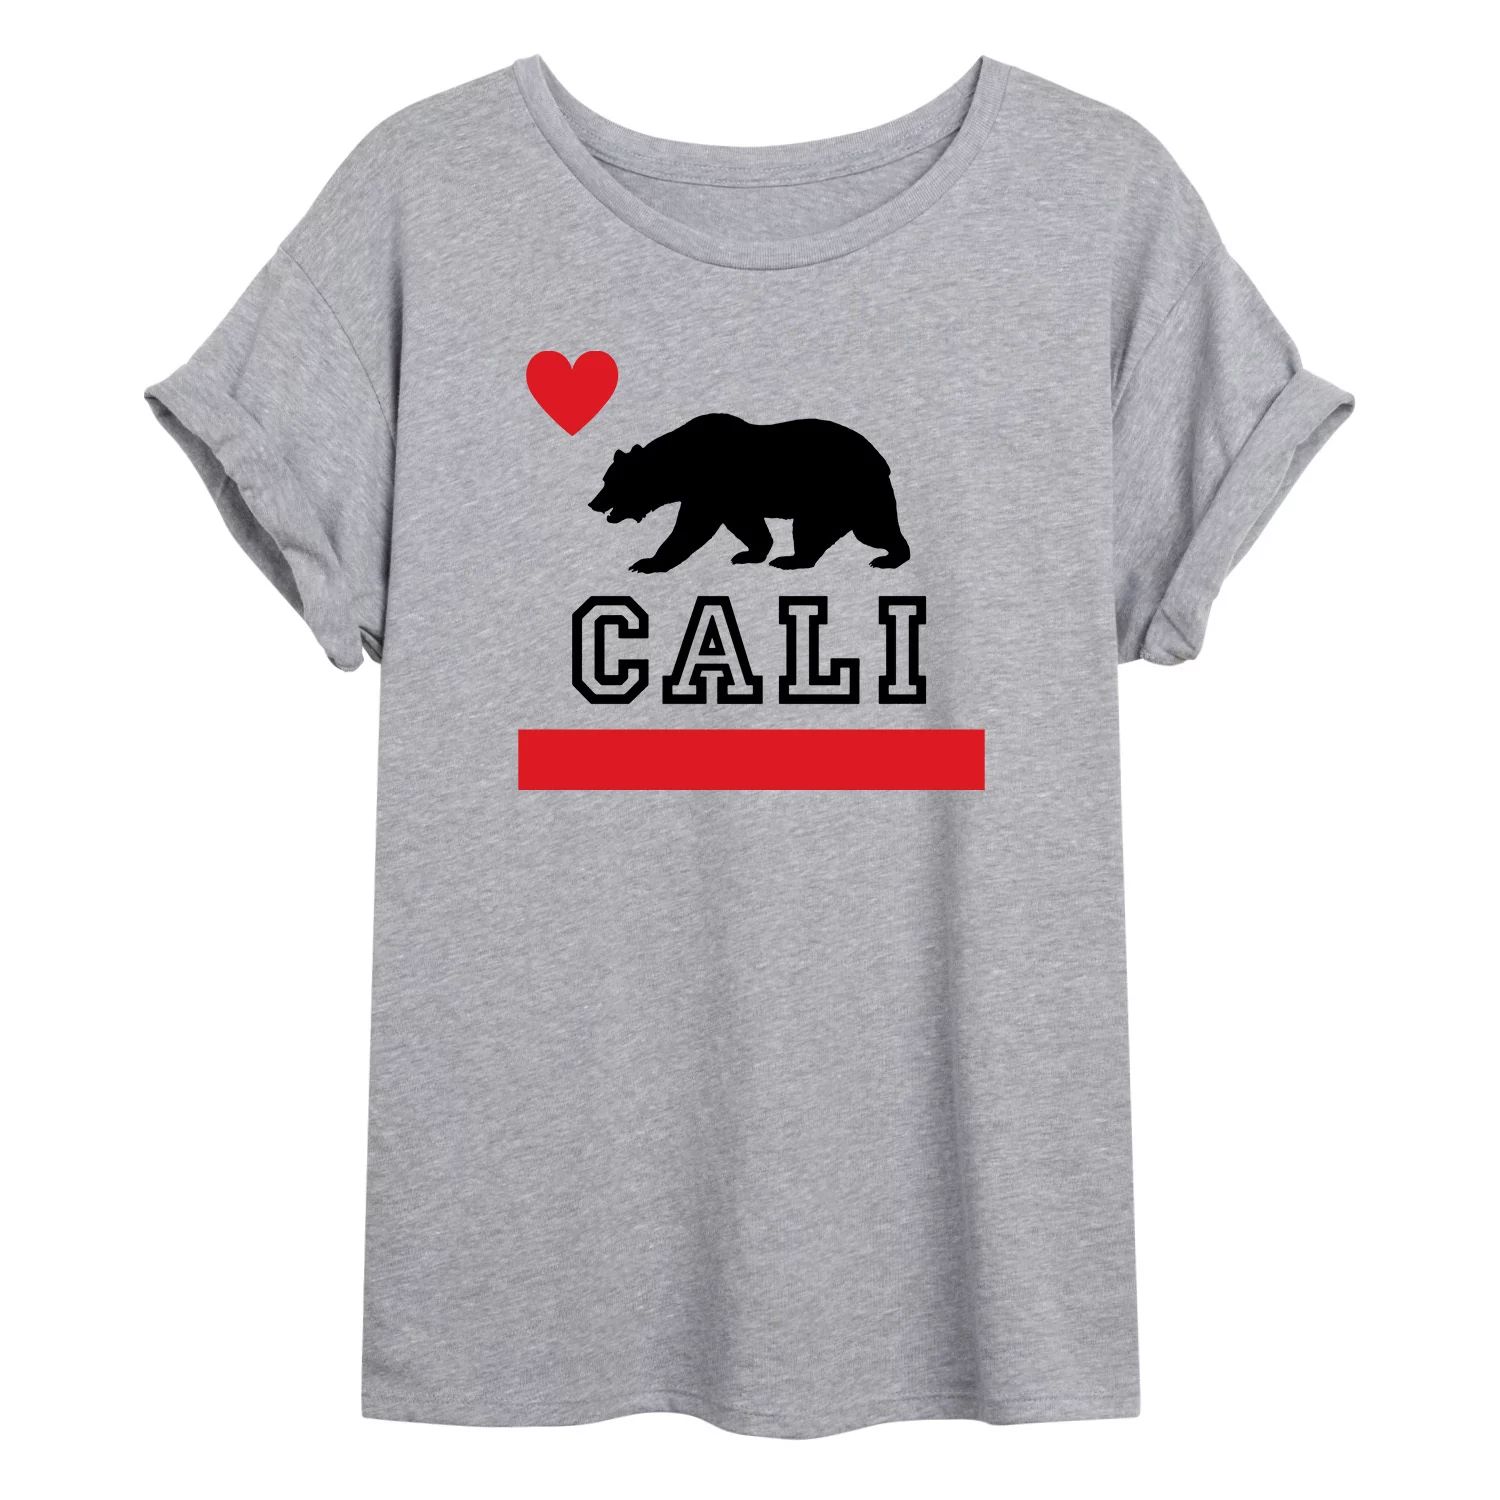 Размерная футболка с рисунком Cali Love для юниоров Licensed Character